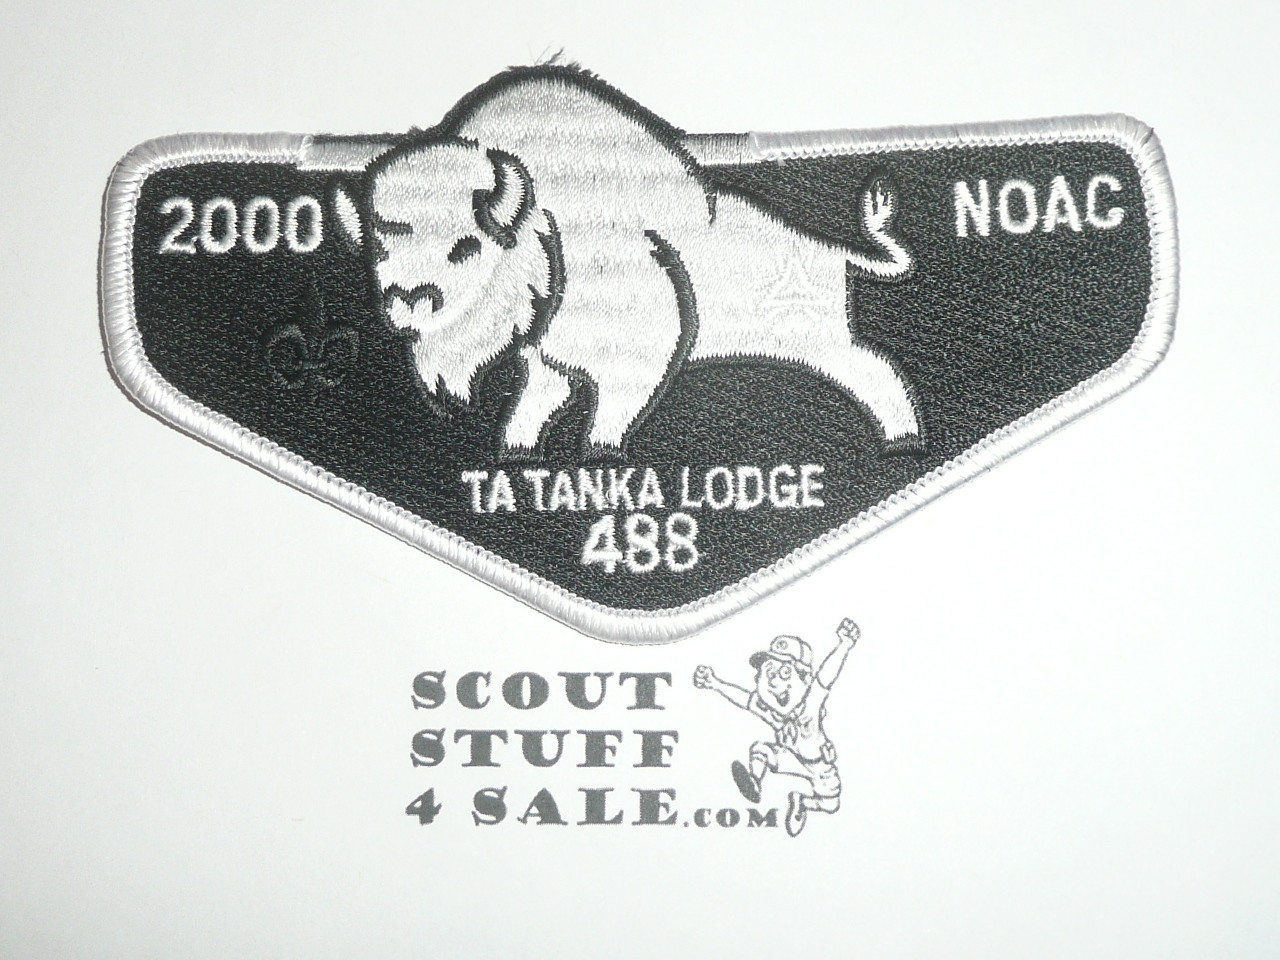 Order of the Arrow Lodge #488 Ta Tanka zs1 2000 NOAC Flap Patch